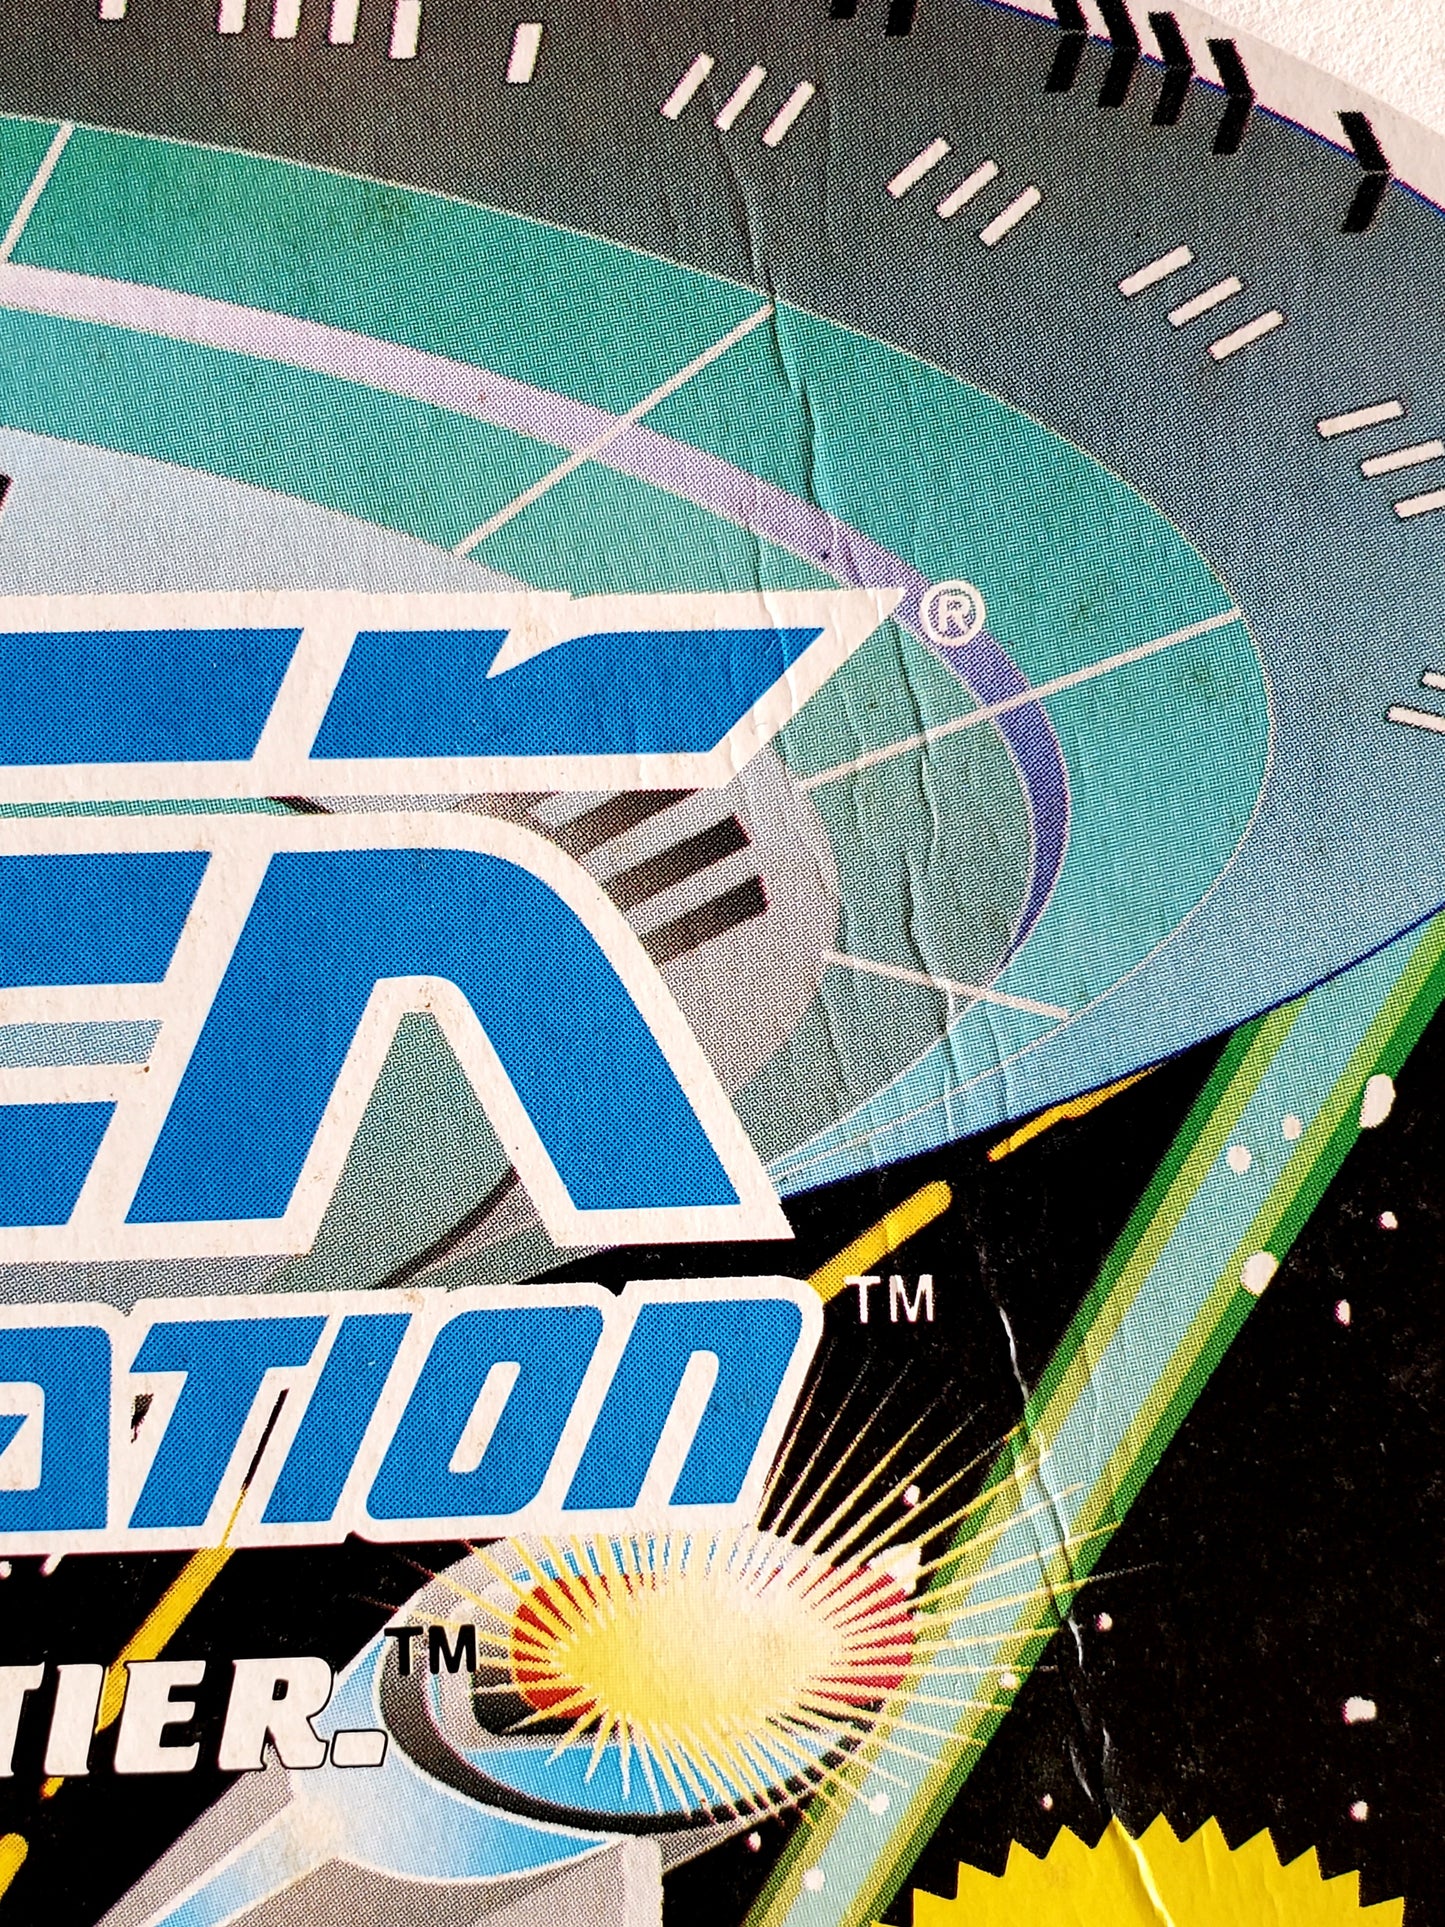 Star Trek: The Next Generation Lt. Cmdr. Geordi La Forge with a Removable Visor Action Figure (Running Change Variant)